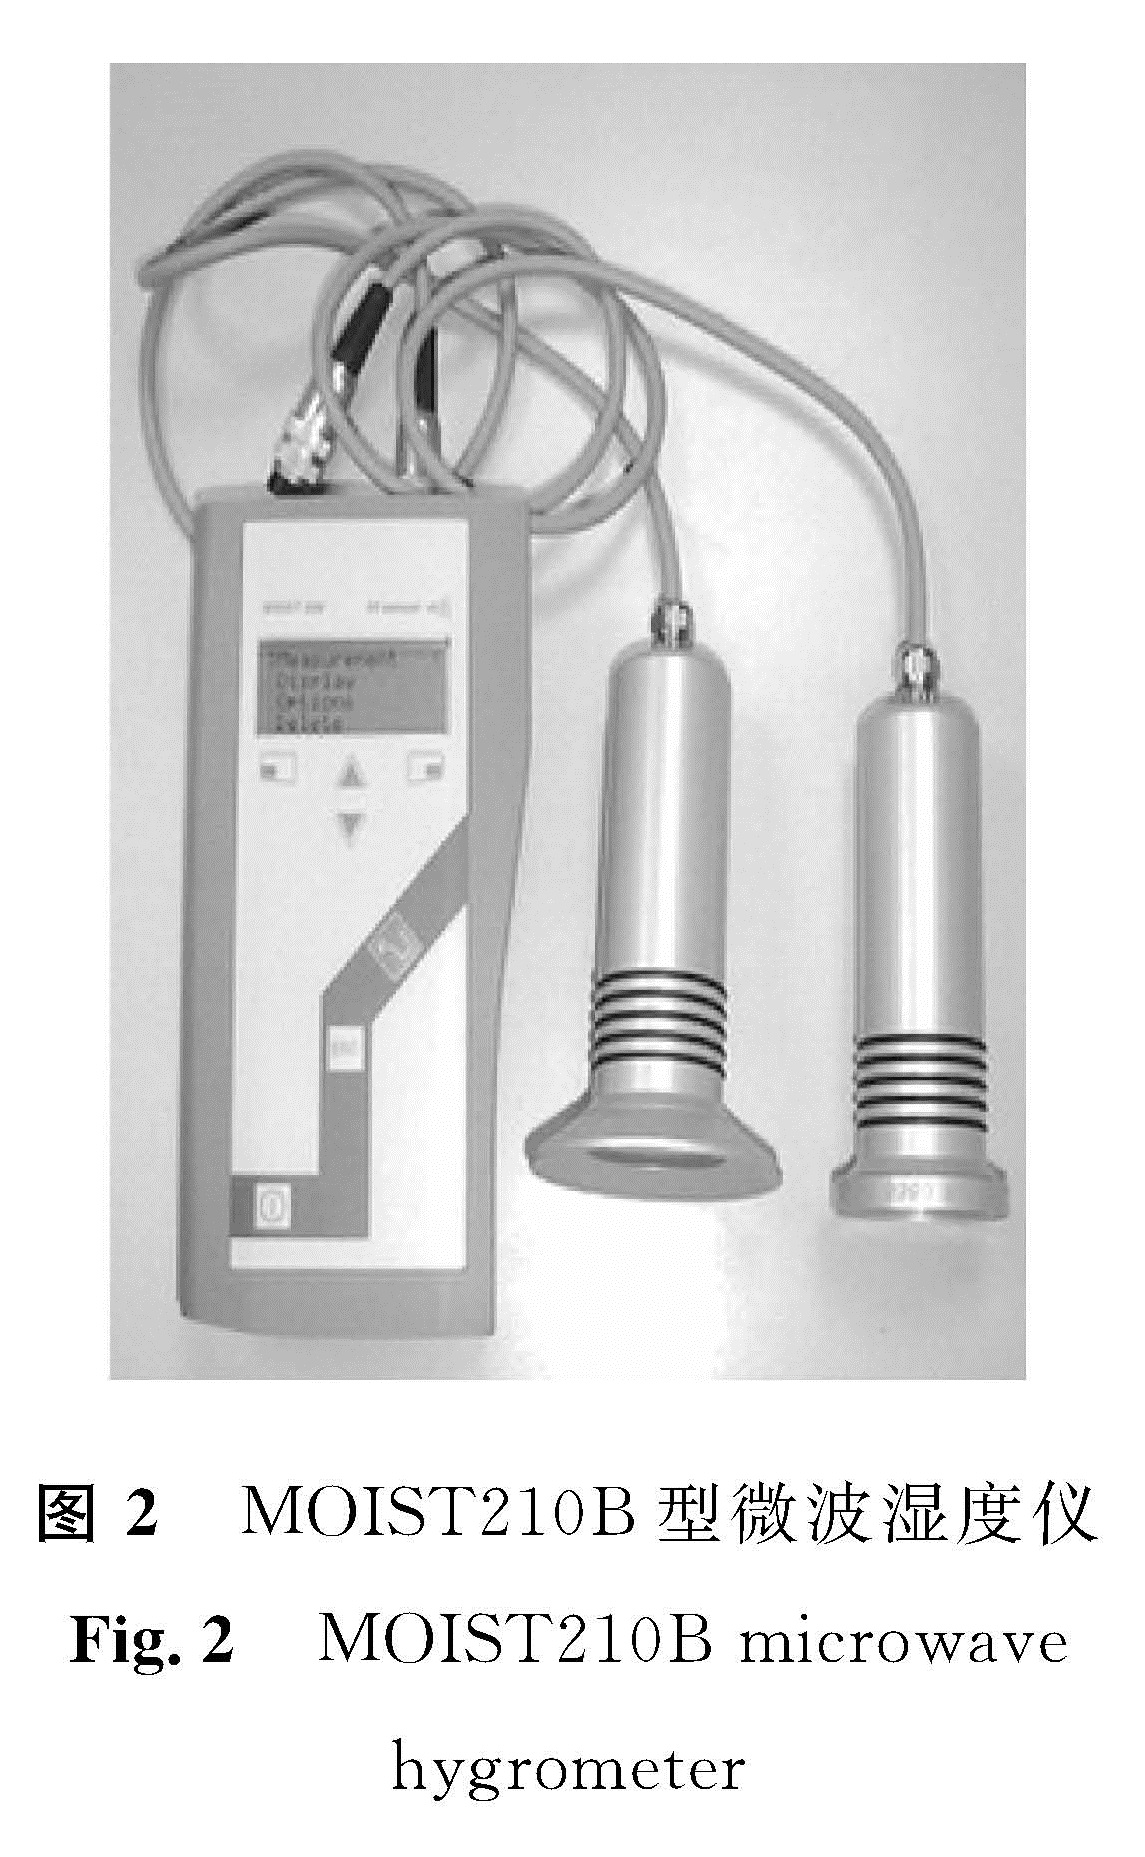 图2 MOIST210B型微波湿度仪<br/>Fig.2 MOIST210B microwave hygrometer